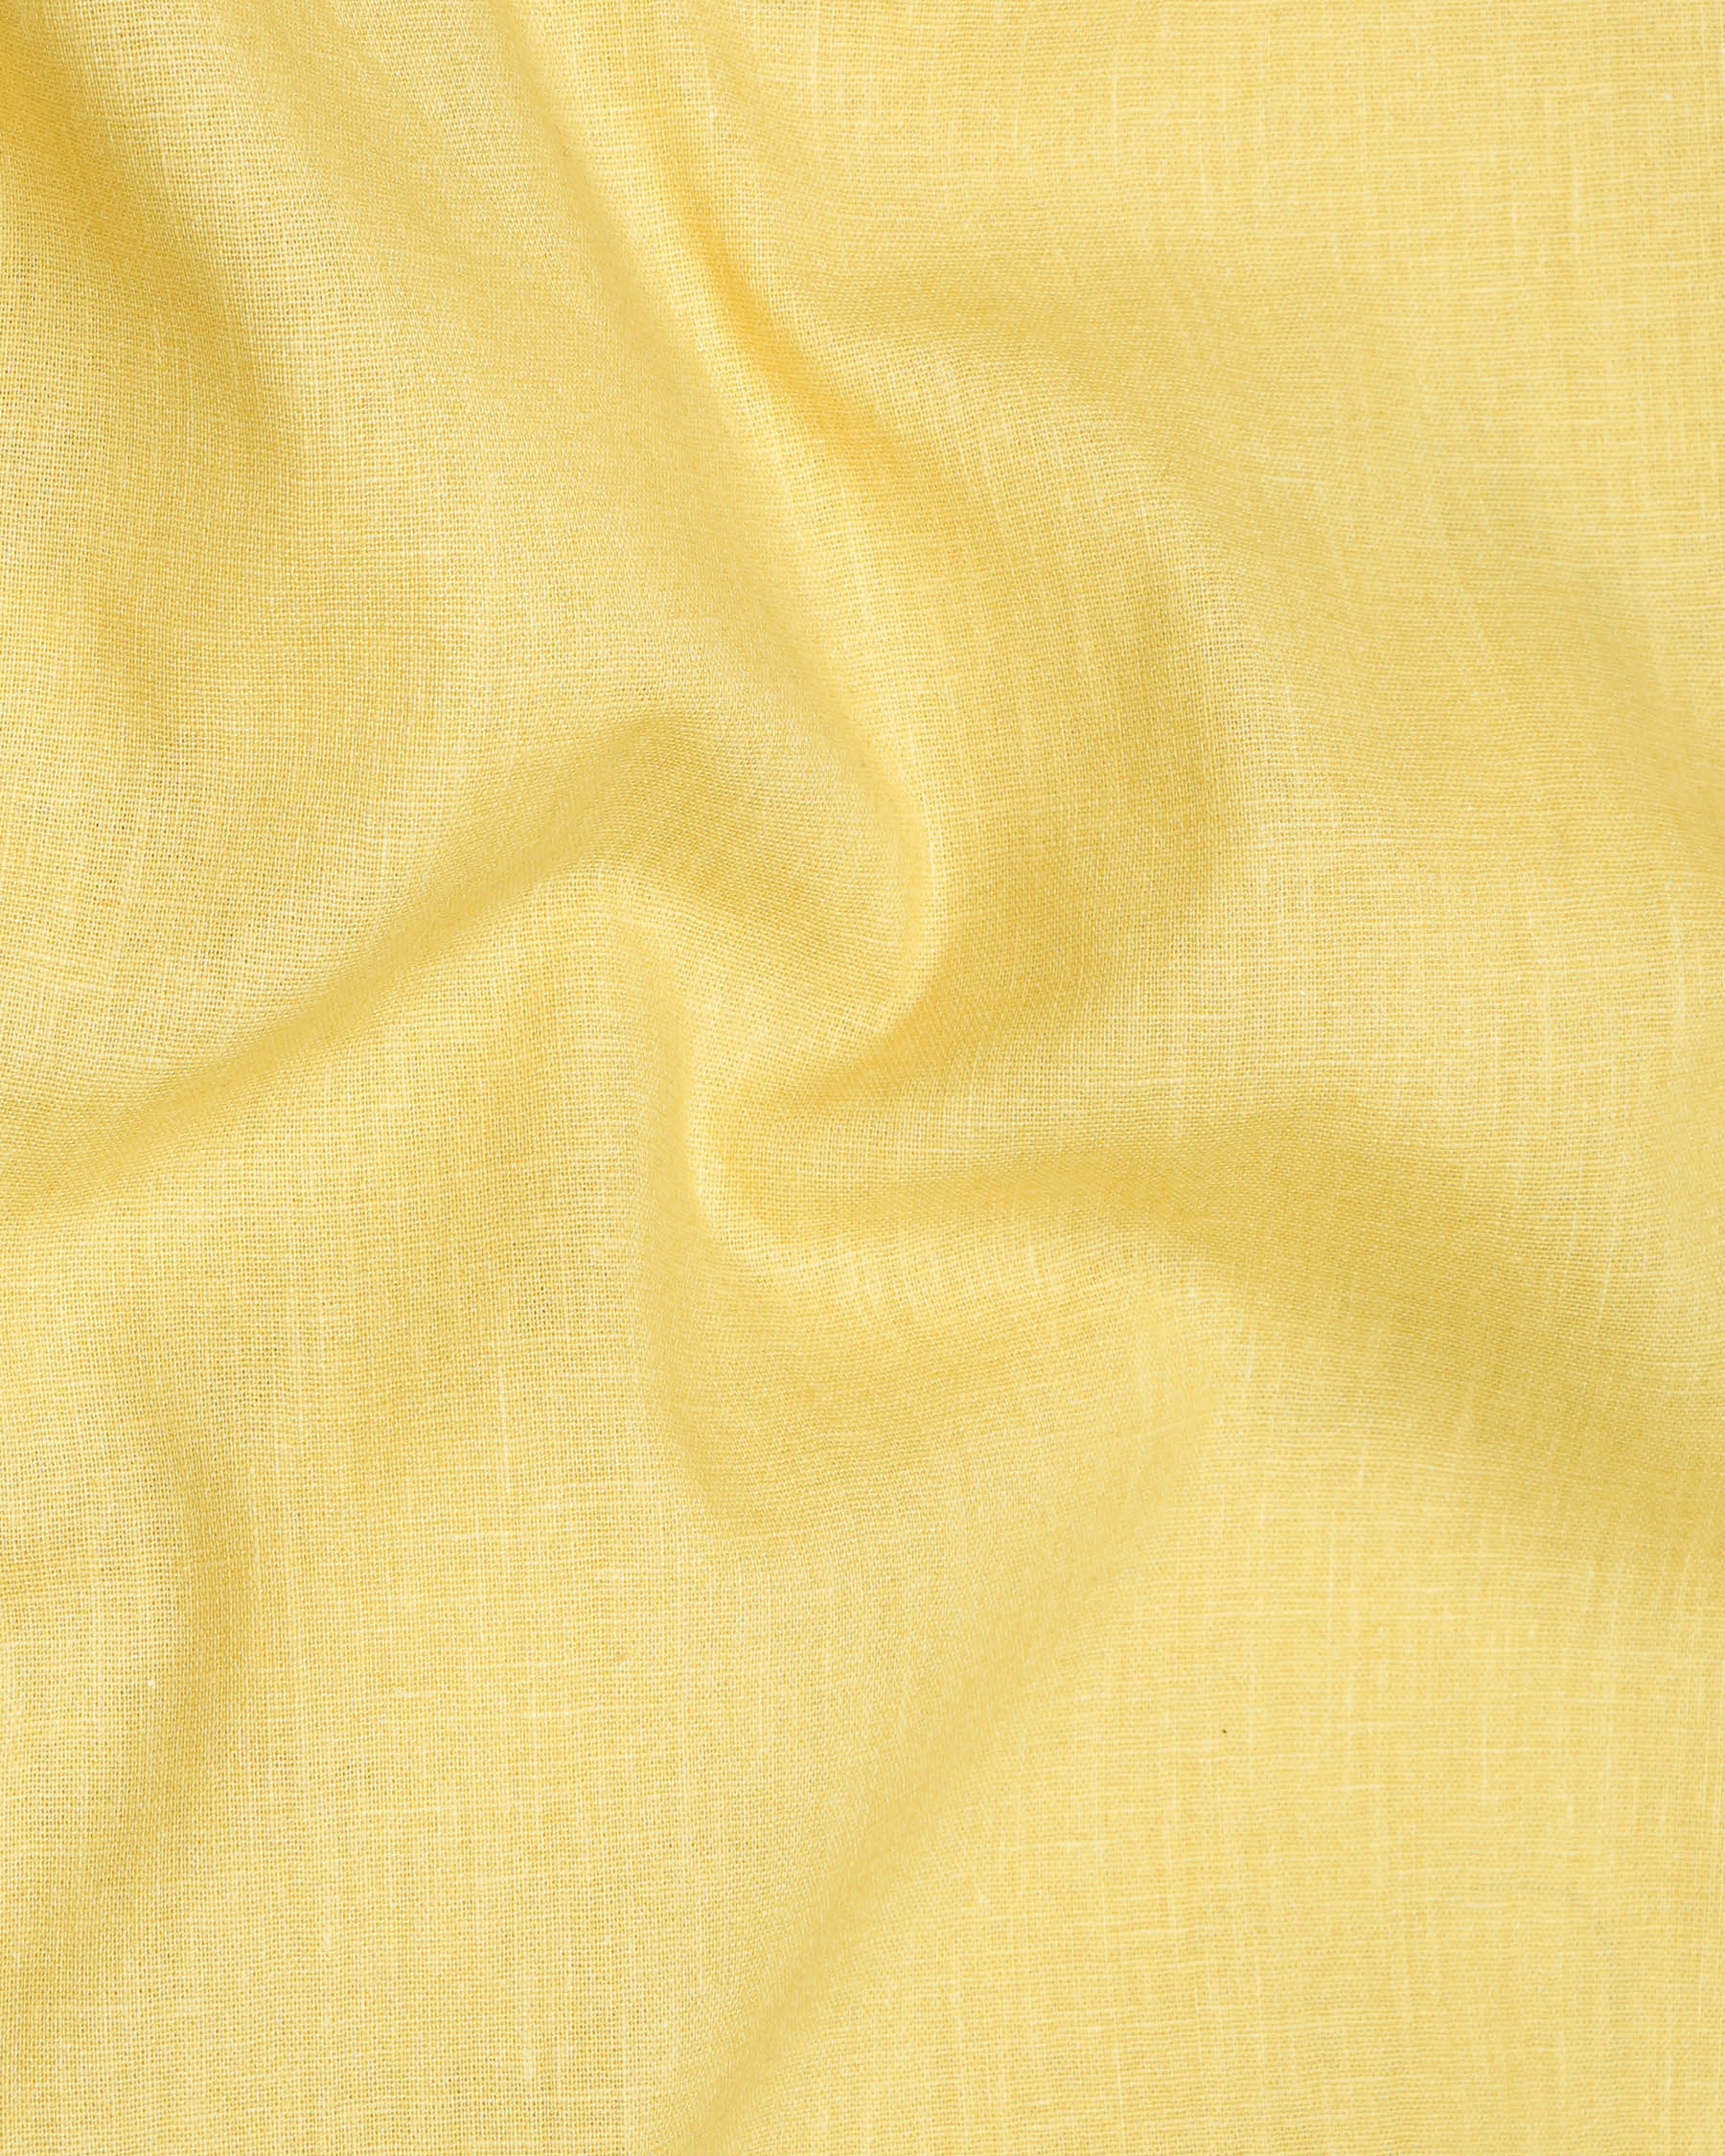 Grandis Yellow Luxurious Linen Shirt 7890-M -38,7890-M -H-38,7890-M -39,7890-M -H-39,7890-M -40,7890-M -H-40,7890-M -42,7890-M -H-42,7890-M -44,7890-M -H-44,7890-M -46,7890-M -H-46,7890-M -48,7890-M -H-48,7890-M -50,7890-M -H-50,7890-M -52,7890-M -H-52